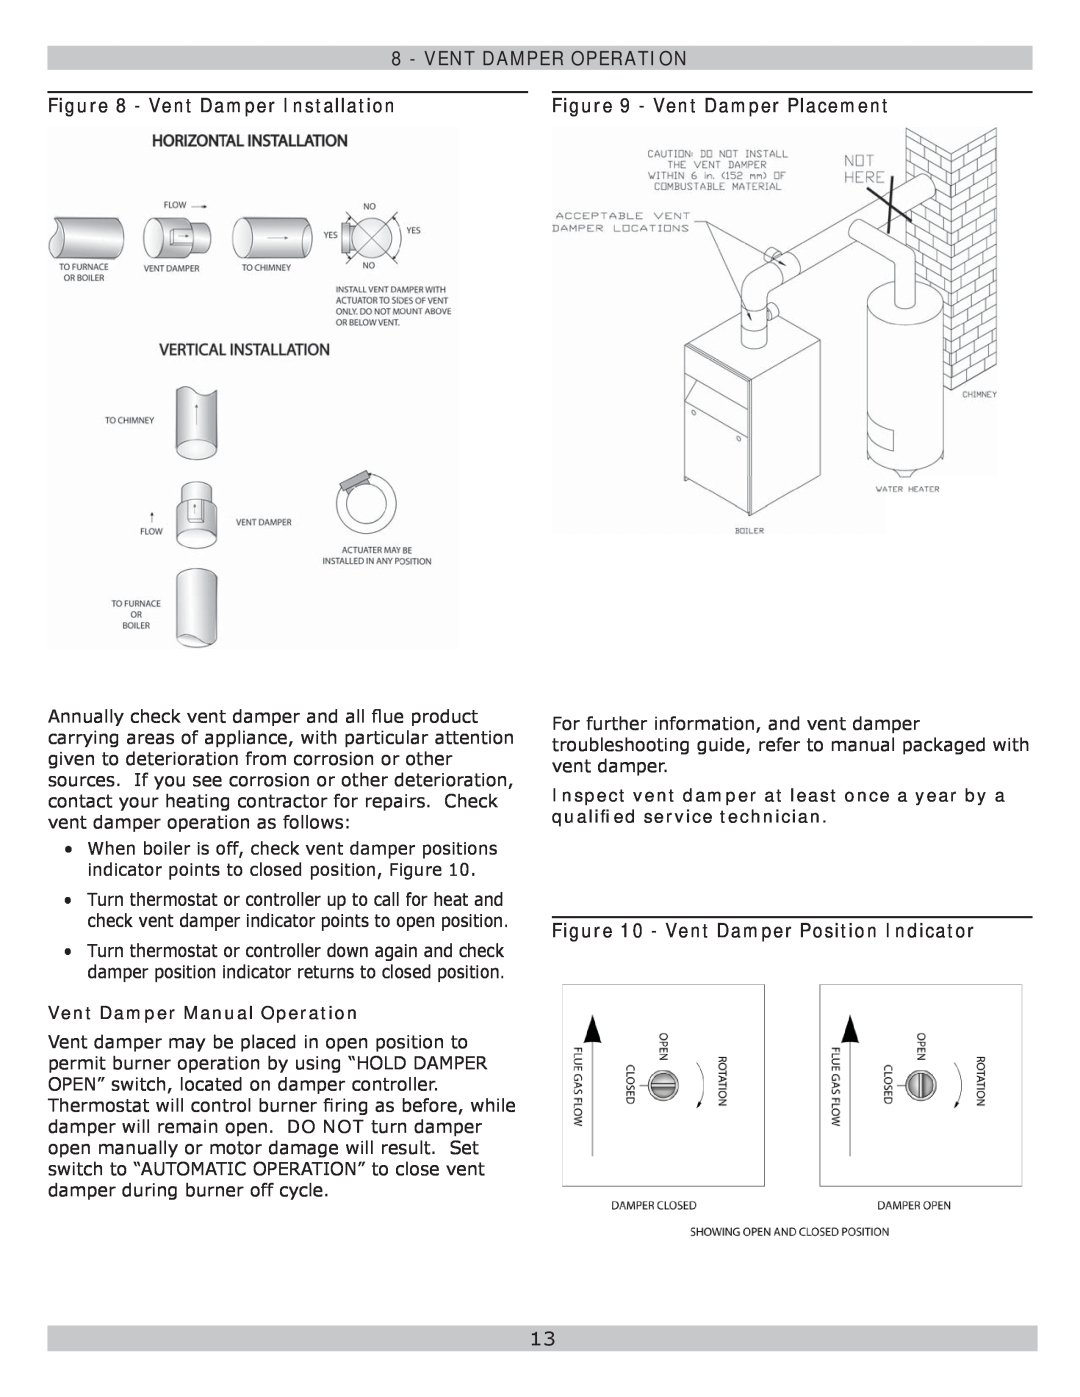 Lennox International Inc GWB8-299E-2 Vent Damper Installation, Vent Damper Placement, Vent Damper Position Indicator 